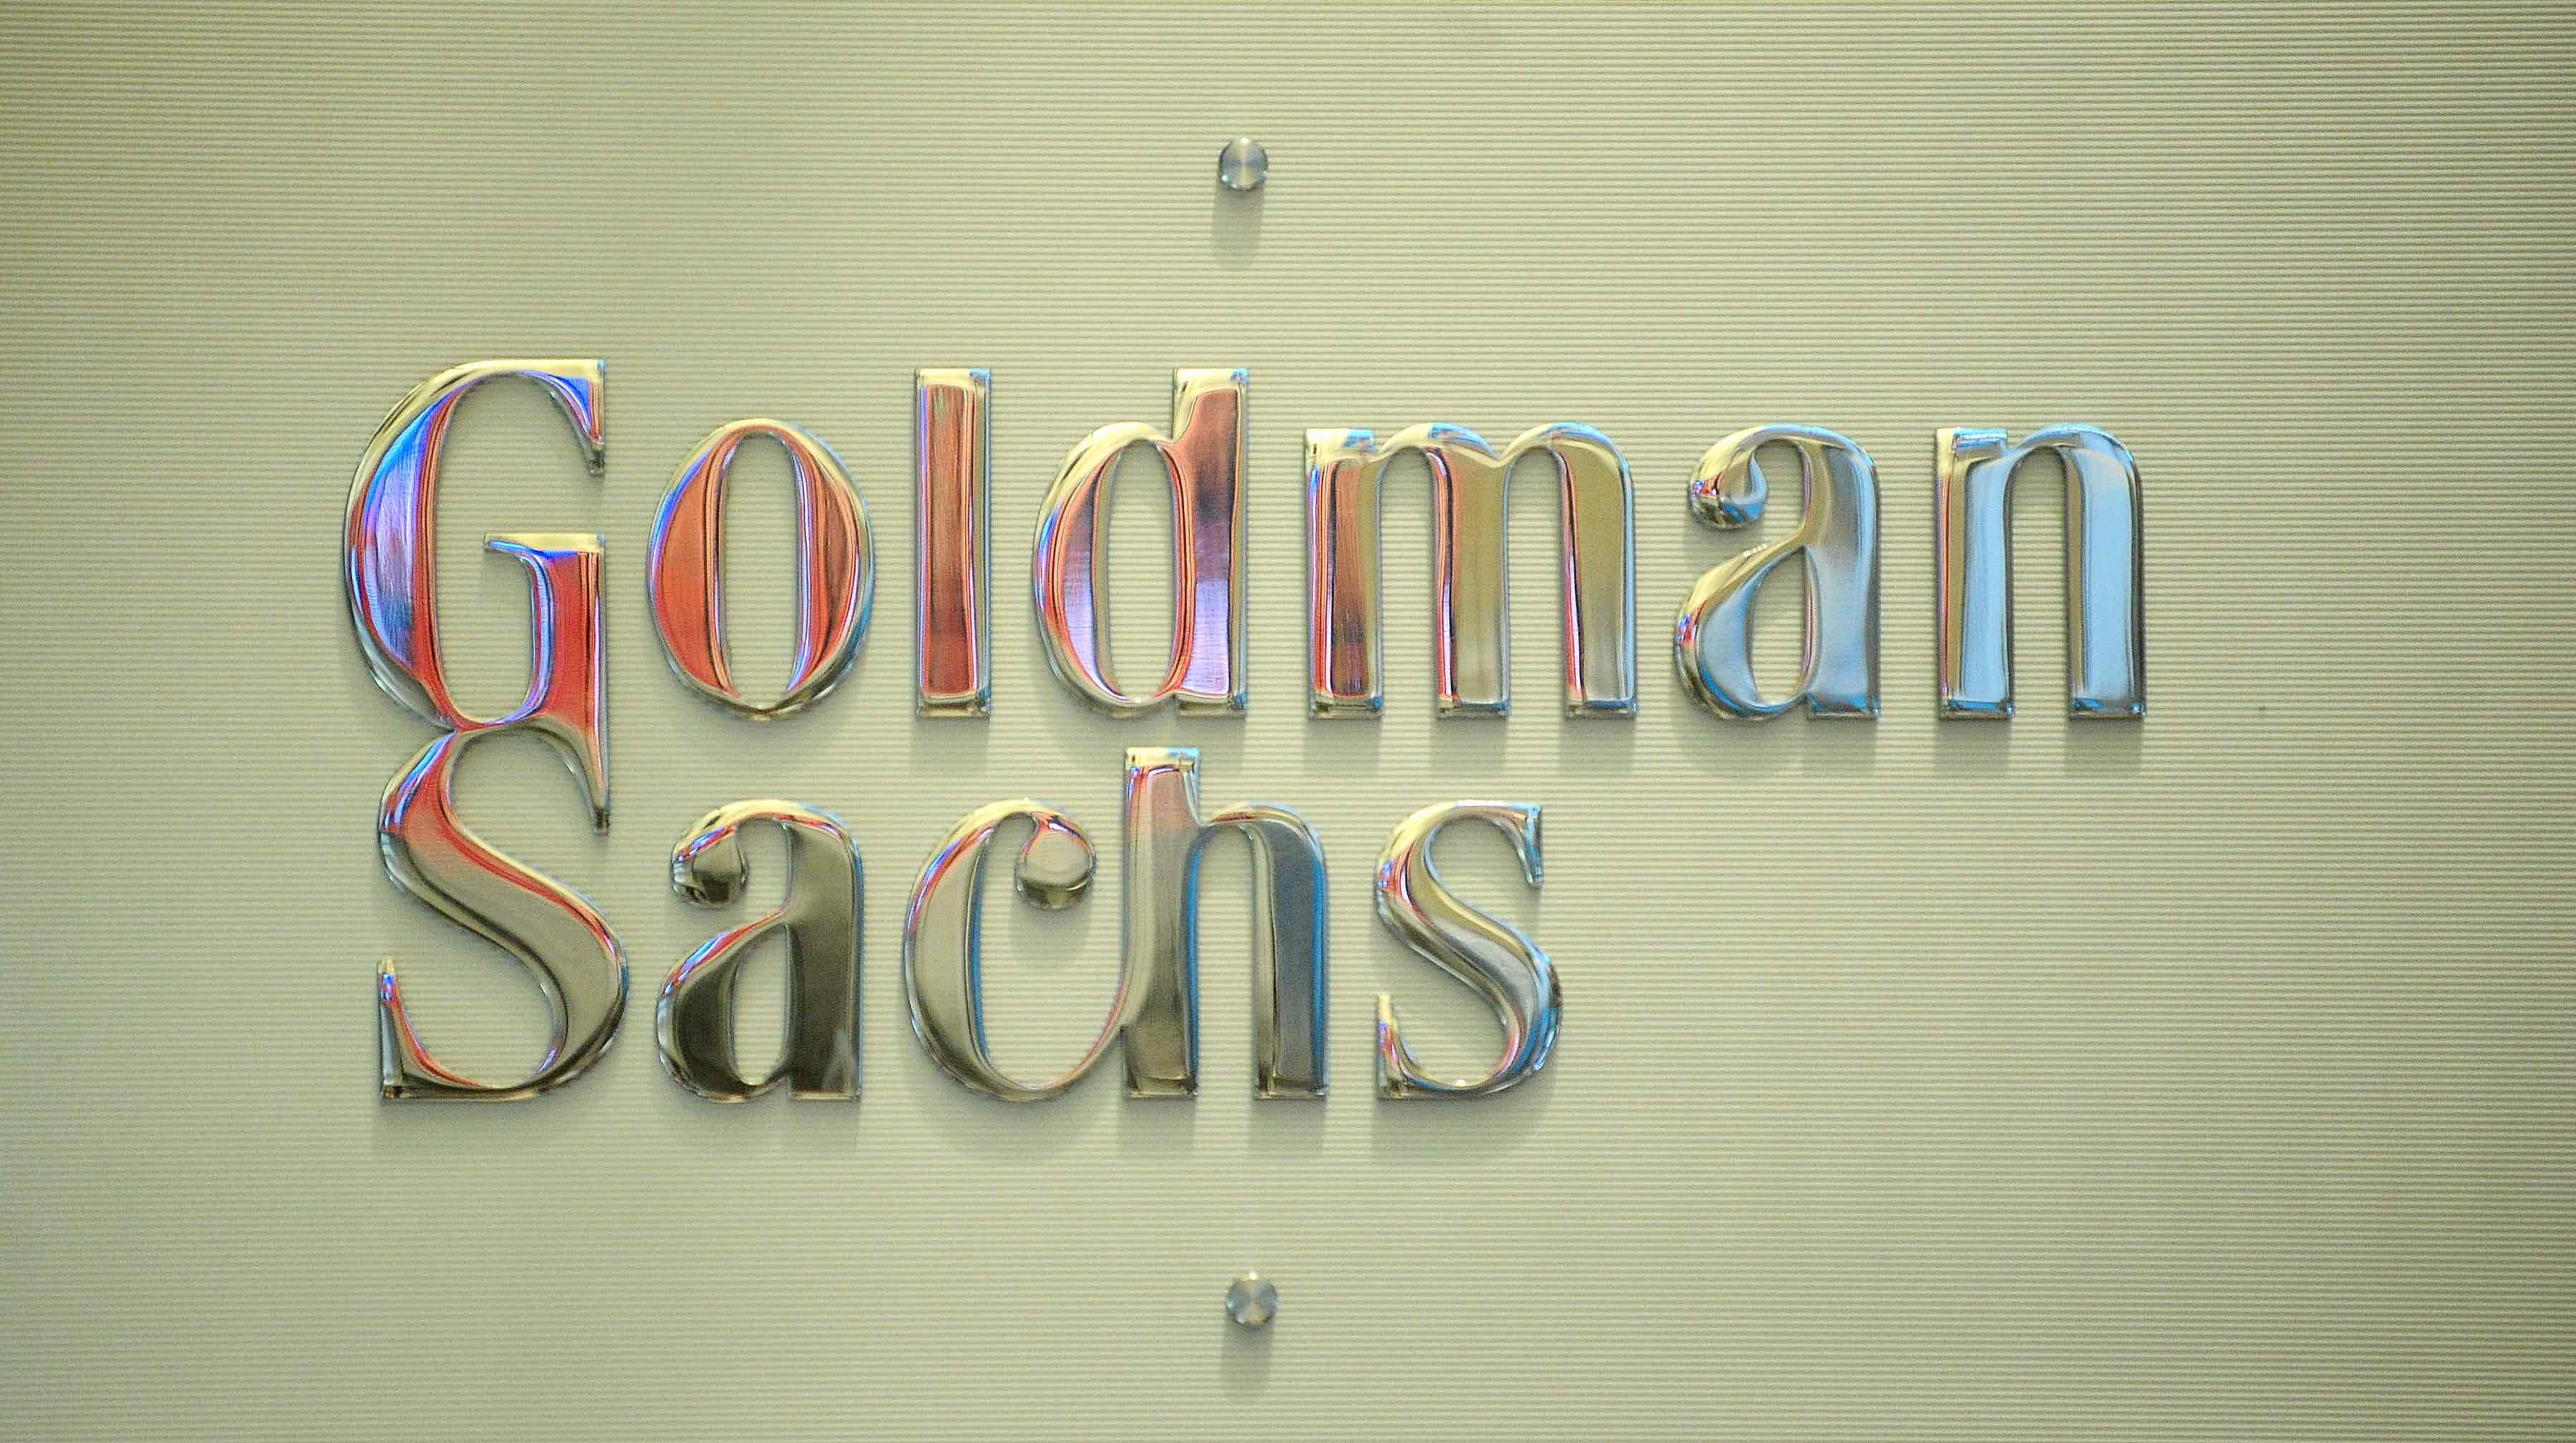 20210120-image-dpa-mb-Goldman Sachs Logo